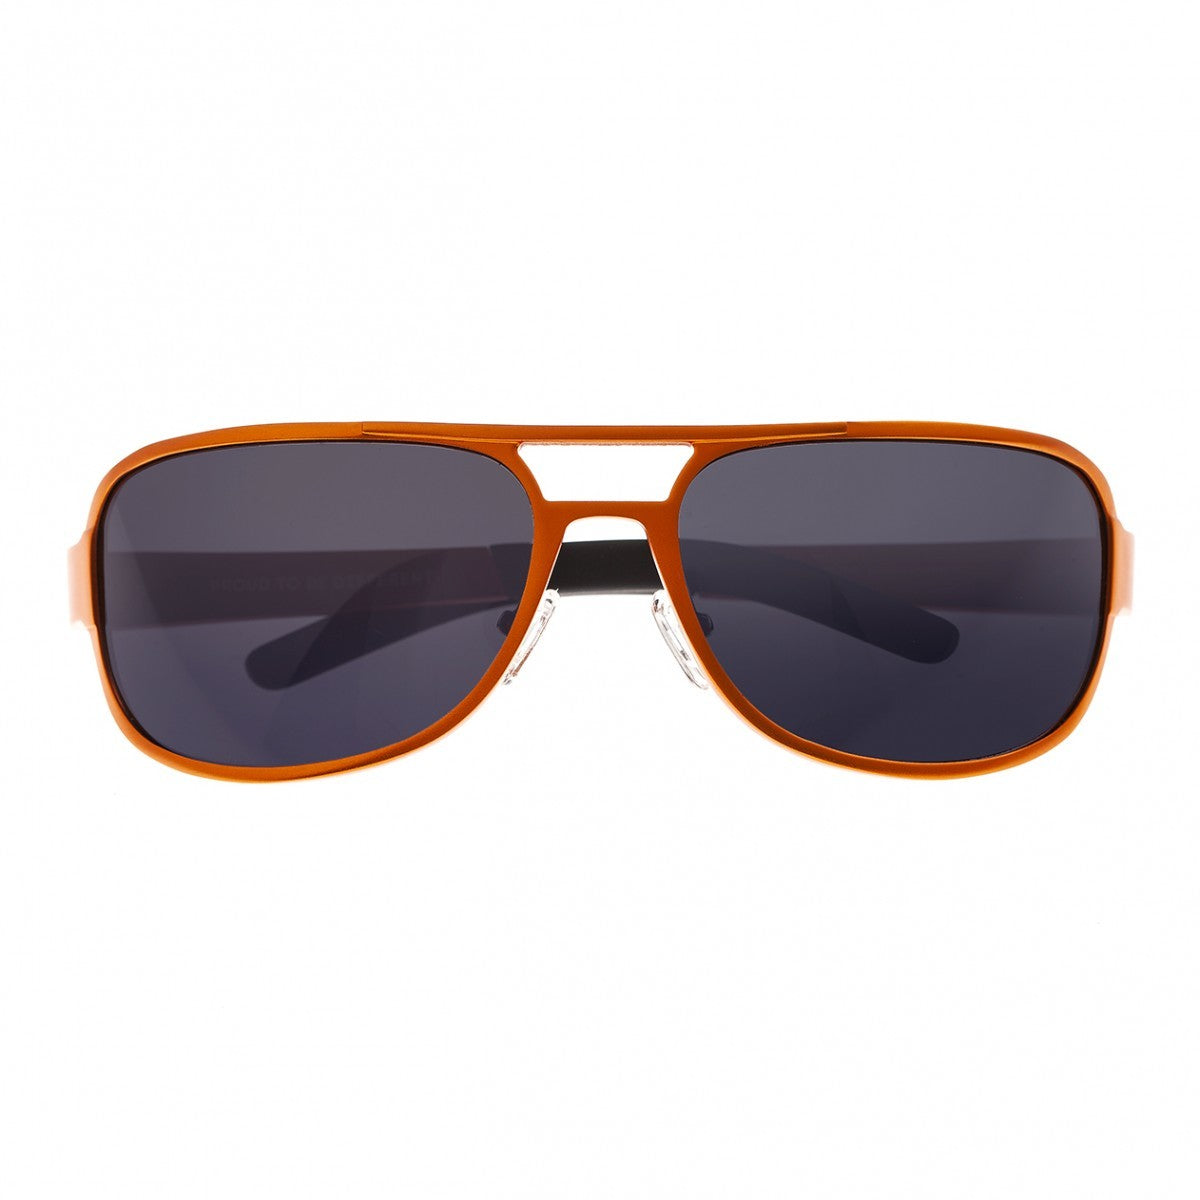 Breed Xander Aluminium Polarized Sunglasses - Orange/Black - BSG014OG